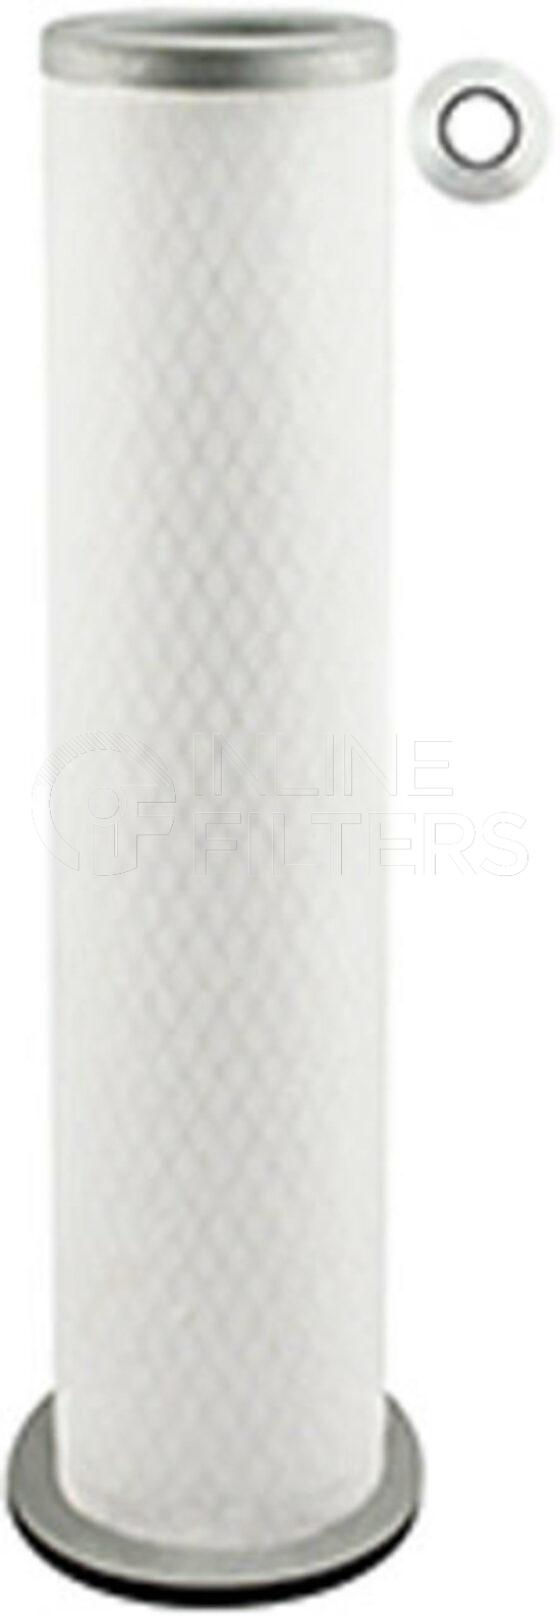 Inline FA14701. Air Filter Product – Cartridge – Inner Product Inner safety air filter cartridge Outer FIN-FA10127 or Outer FIN-FA14937 or Outer FIN-FA14922 or Outer FIN-FA14942 or Outer FBW-PA4697-FN or Outer FIN-FA18968